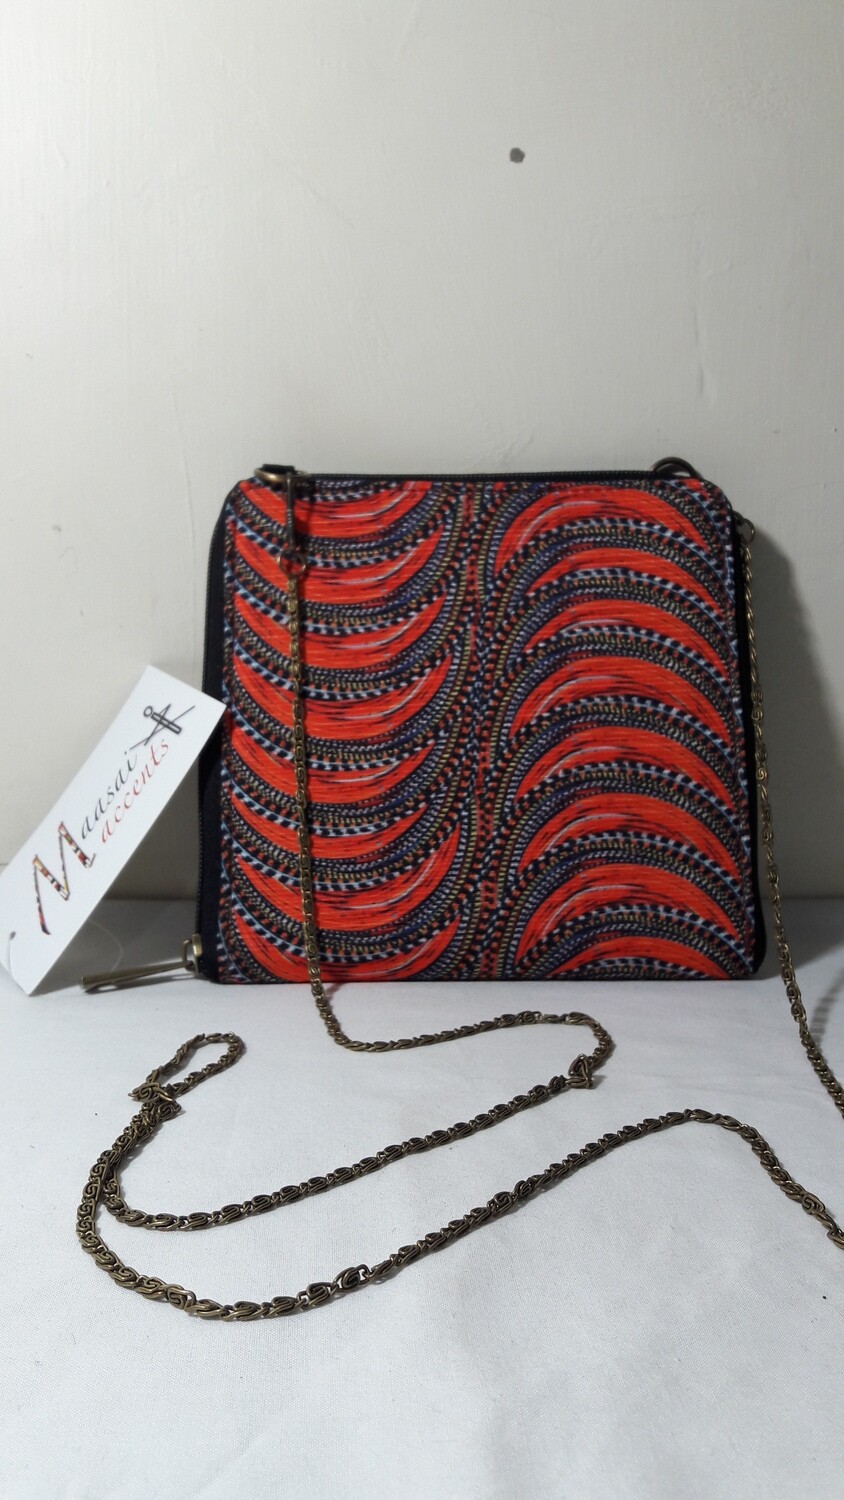 Maasai Accents®, Kitenkela beadwork print, lPad
bag. Kitenkela beadwork polyester canvas print IPad bag